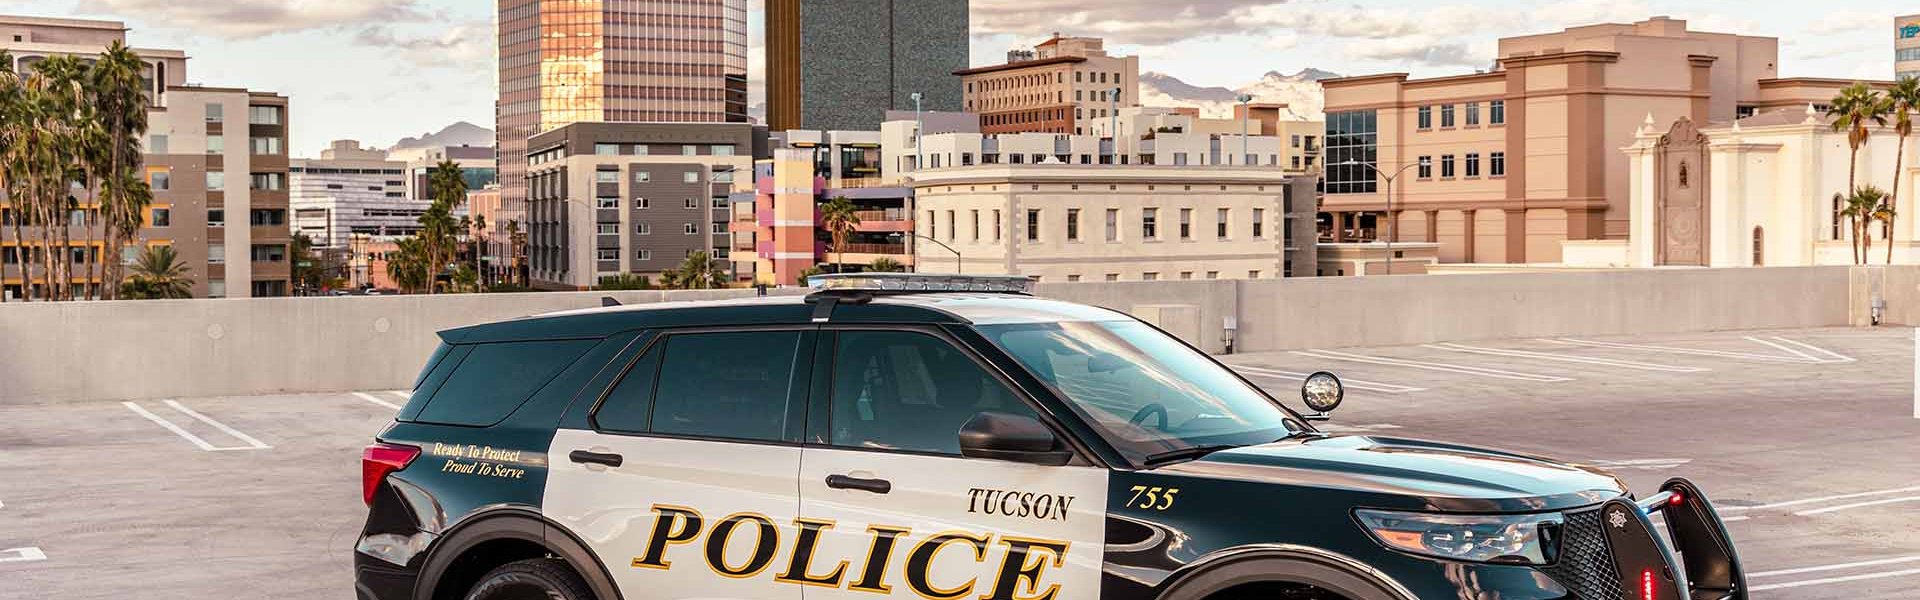 Tucson Police Vehicle